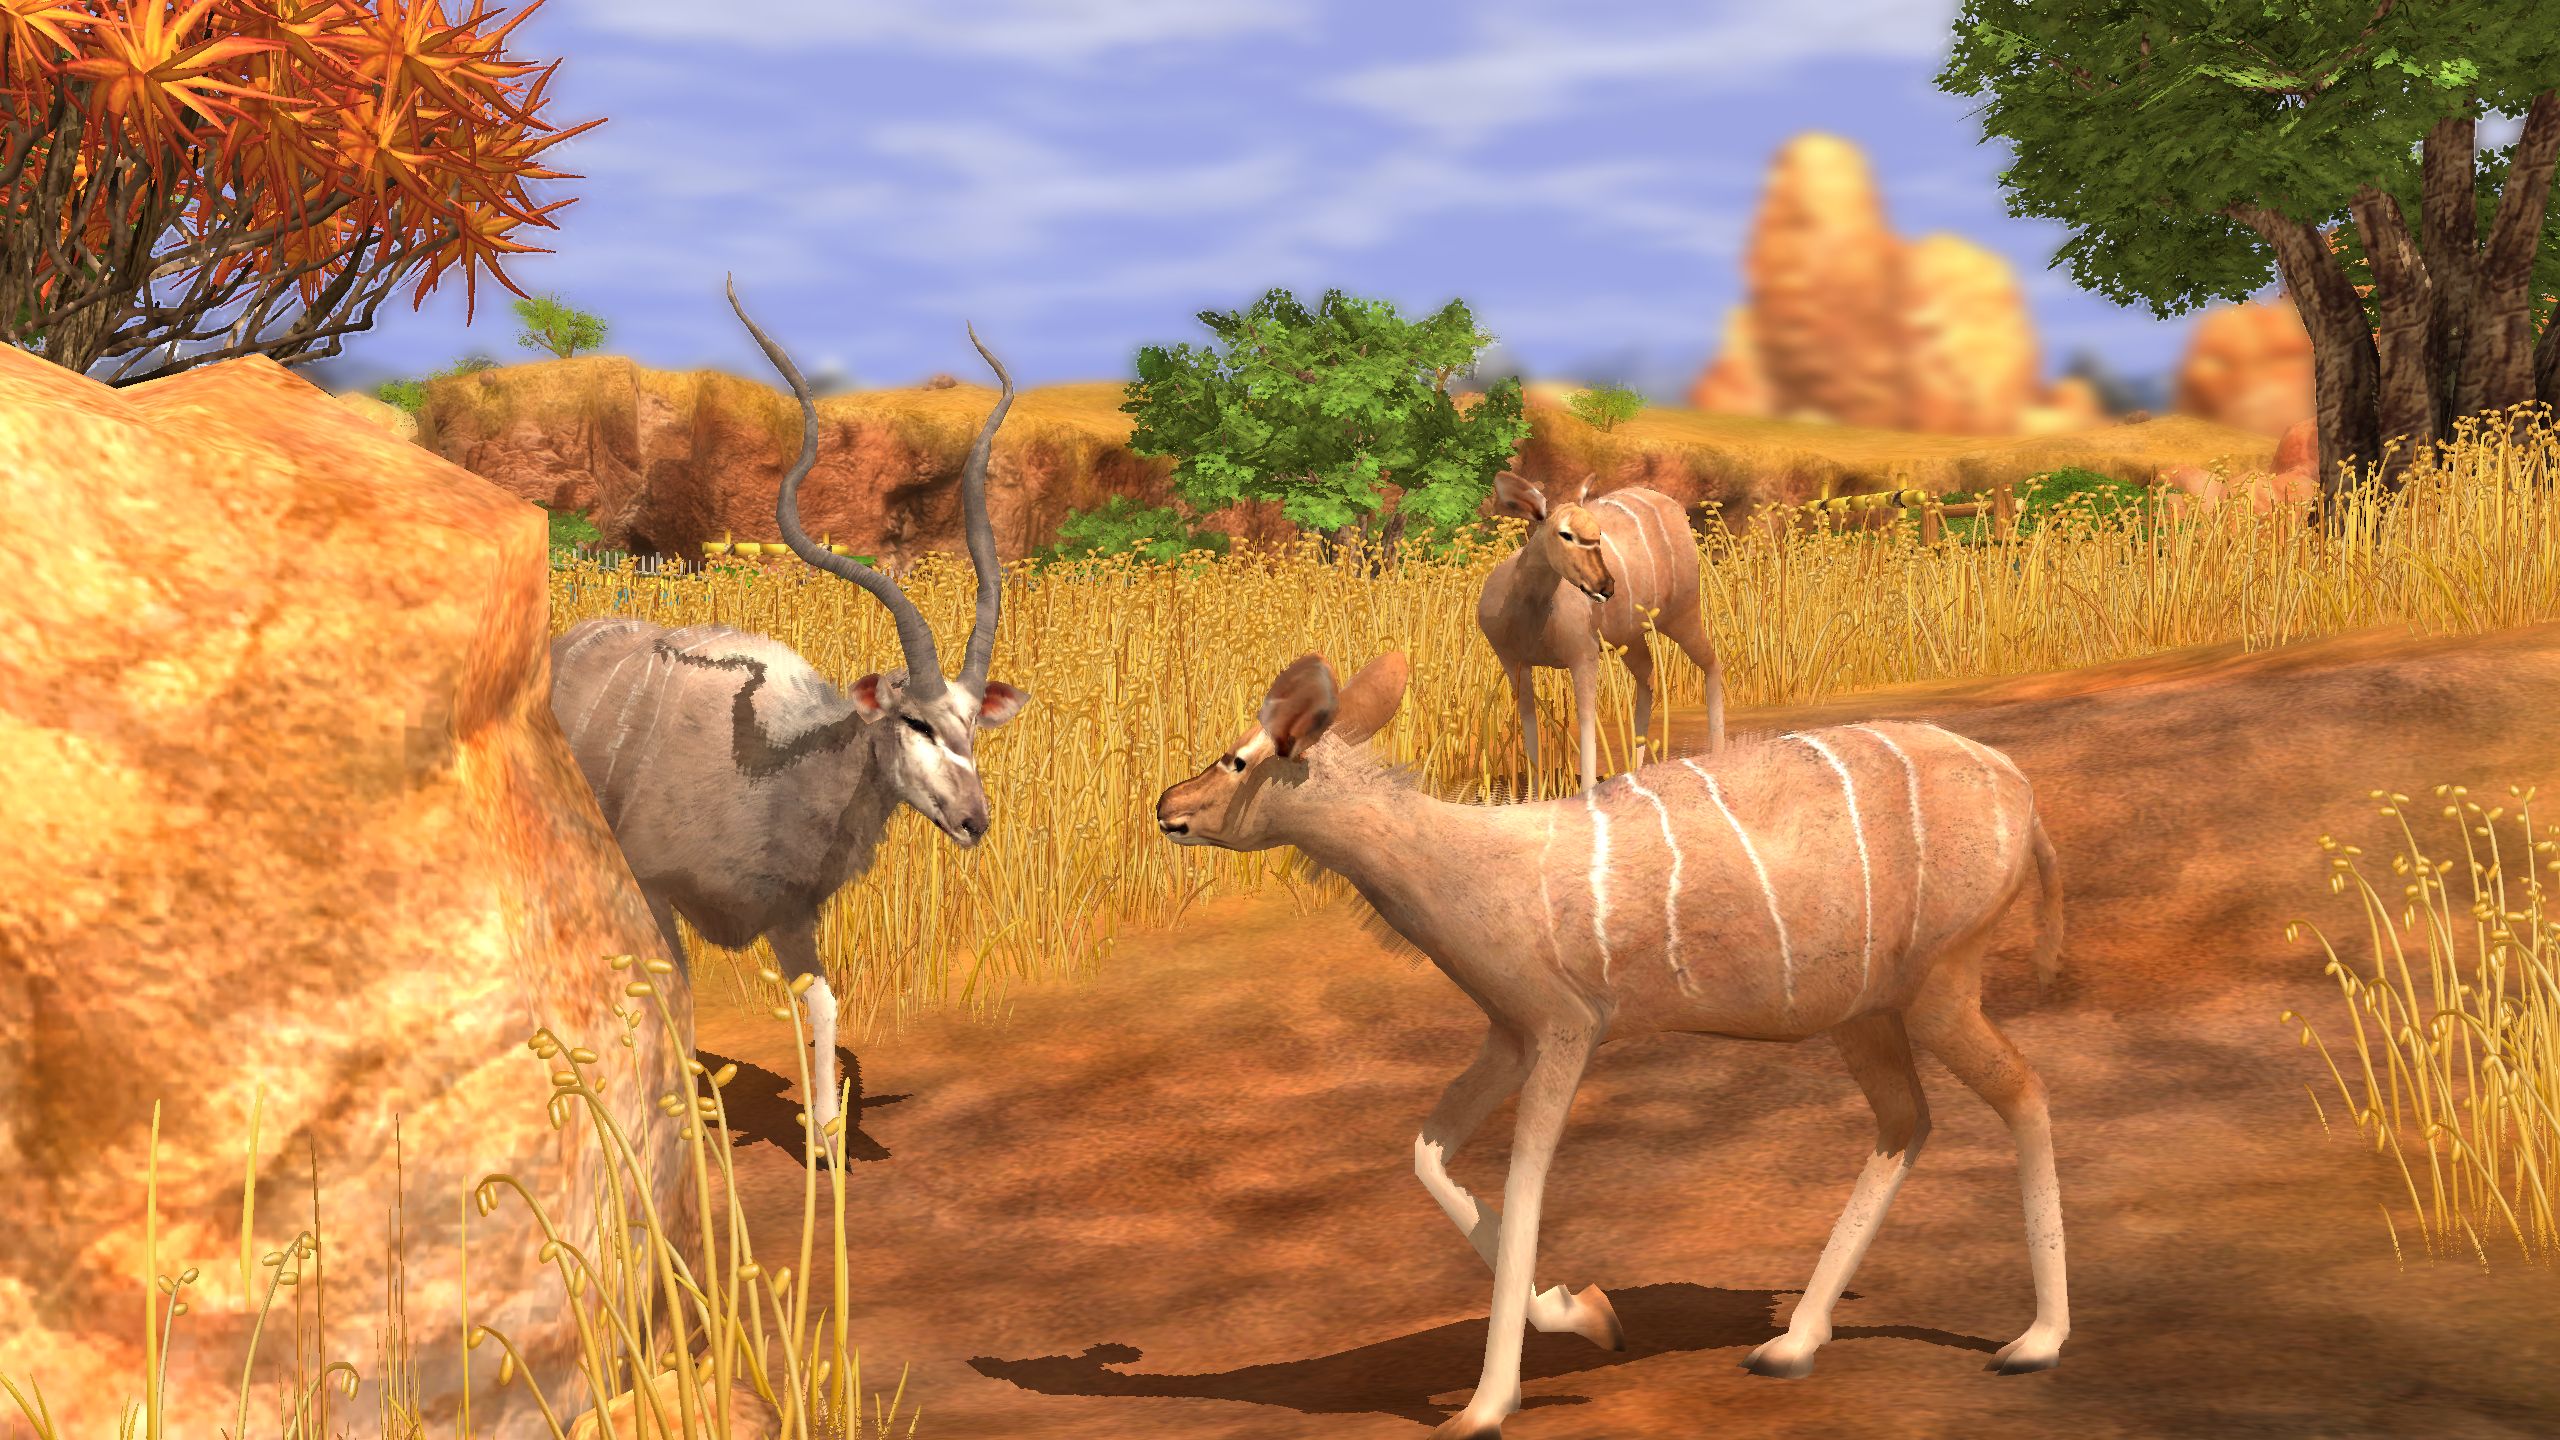 Wildlife Park 3 - Africa screenshot